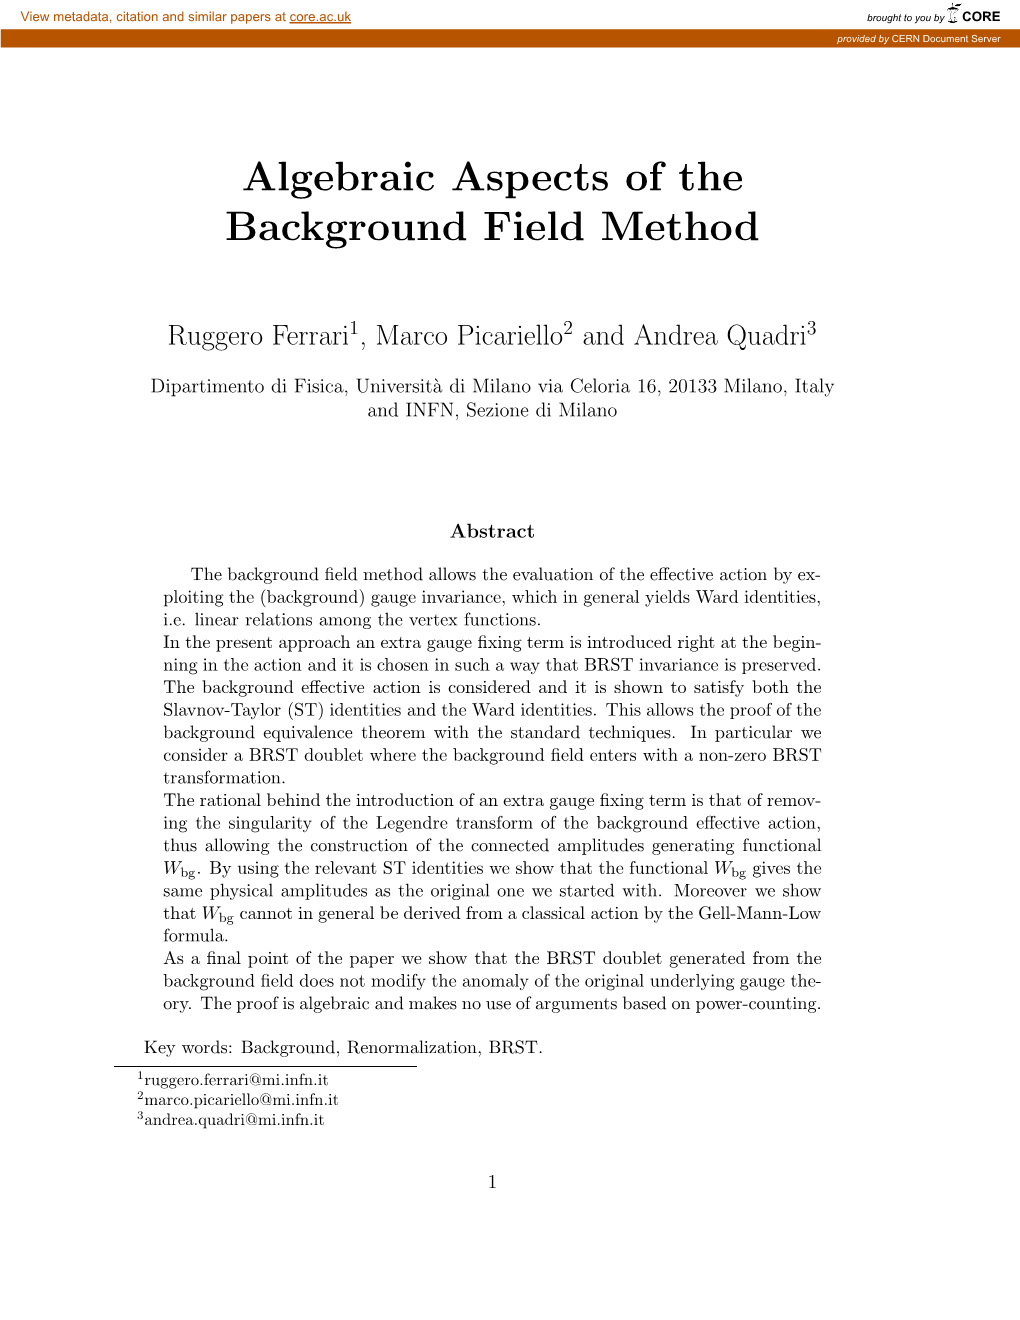 Algebraic Aspects of the Background Field Method